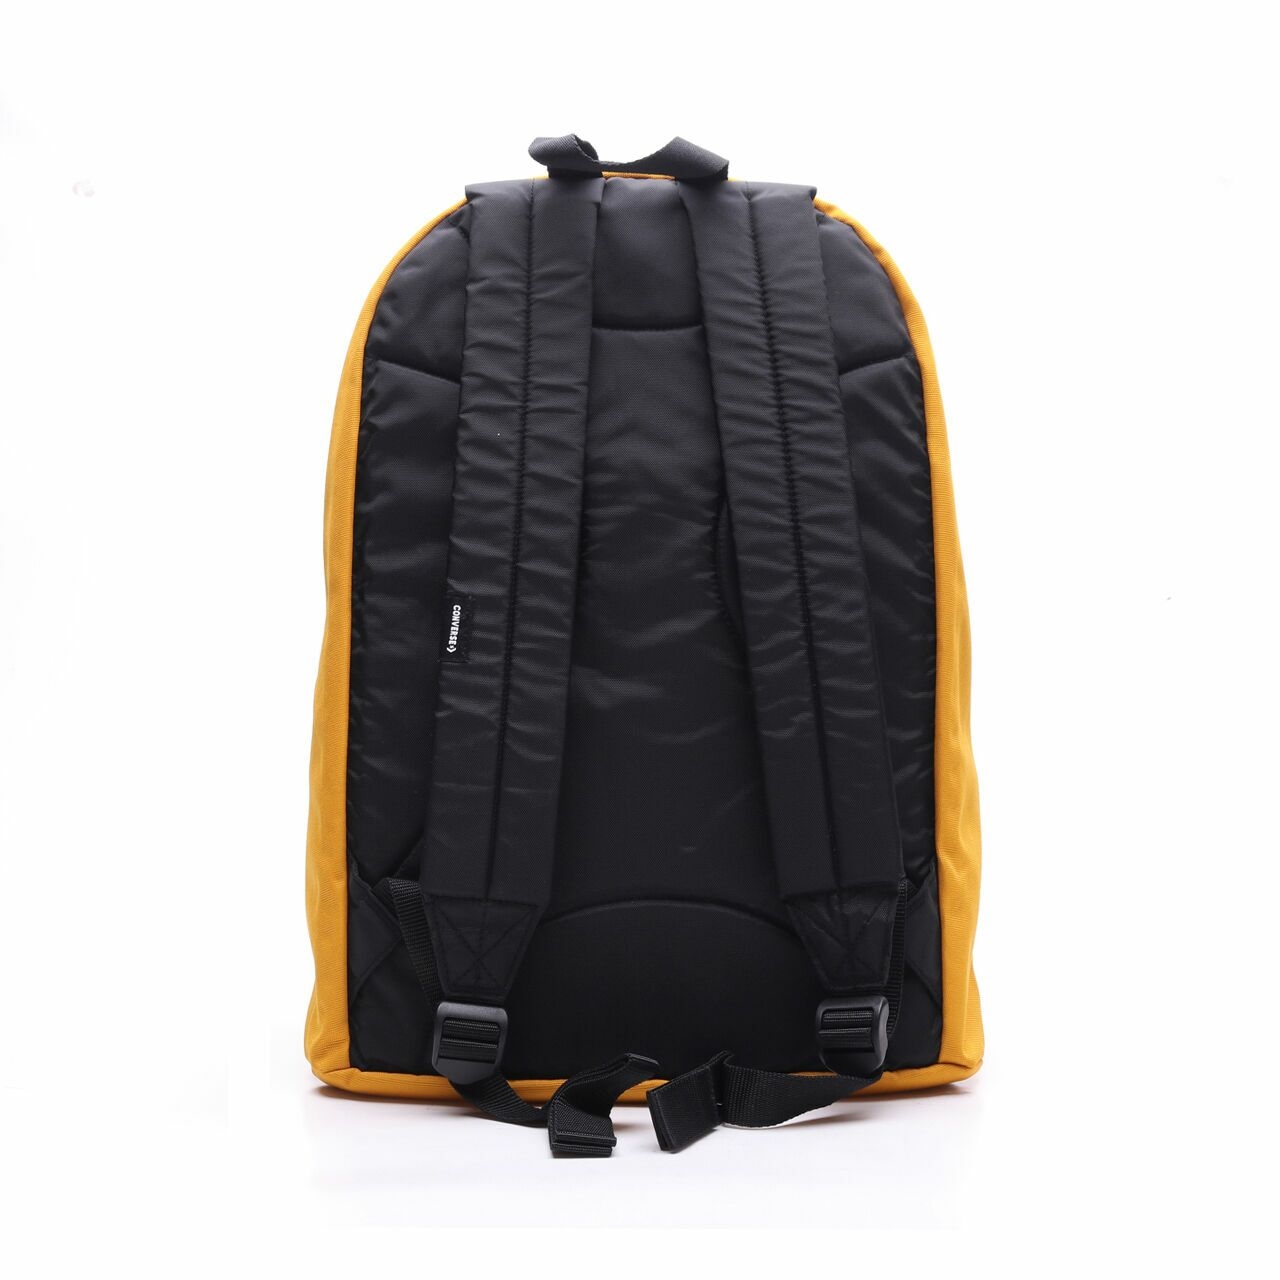 Converse Mustard Backpack